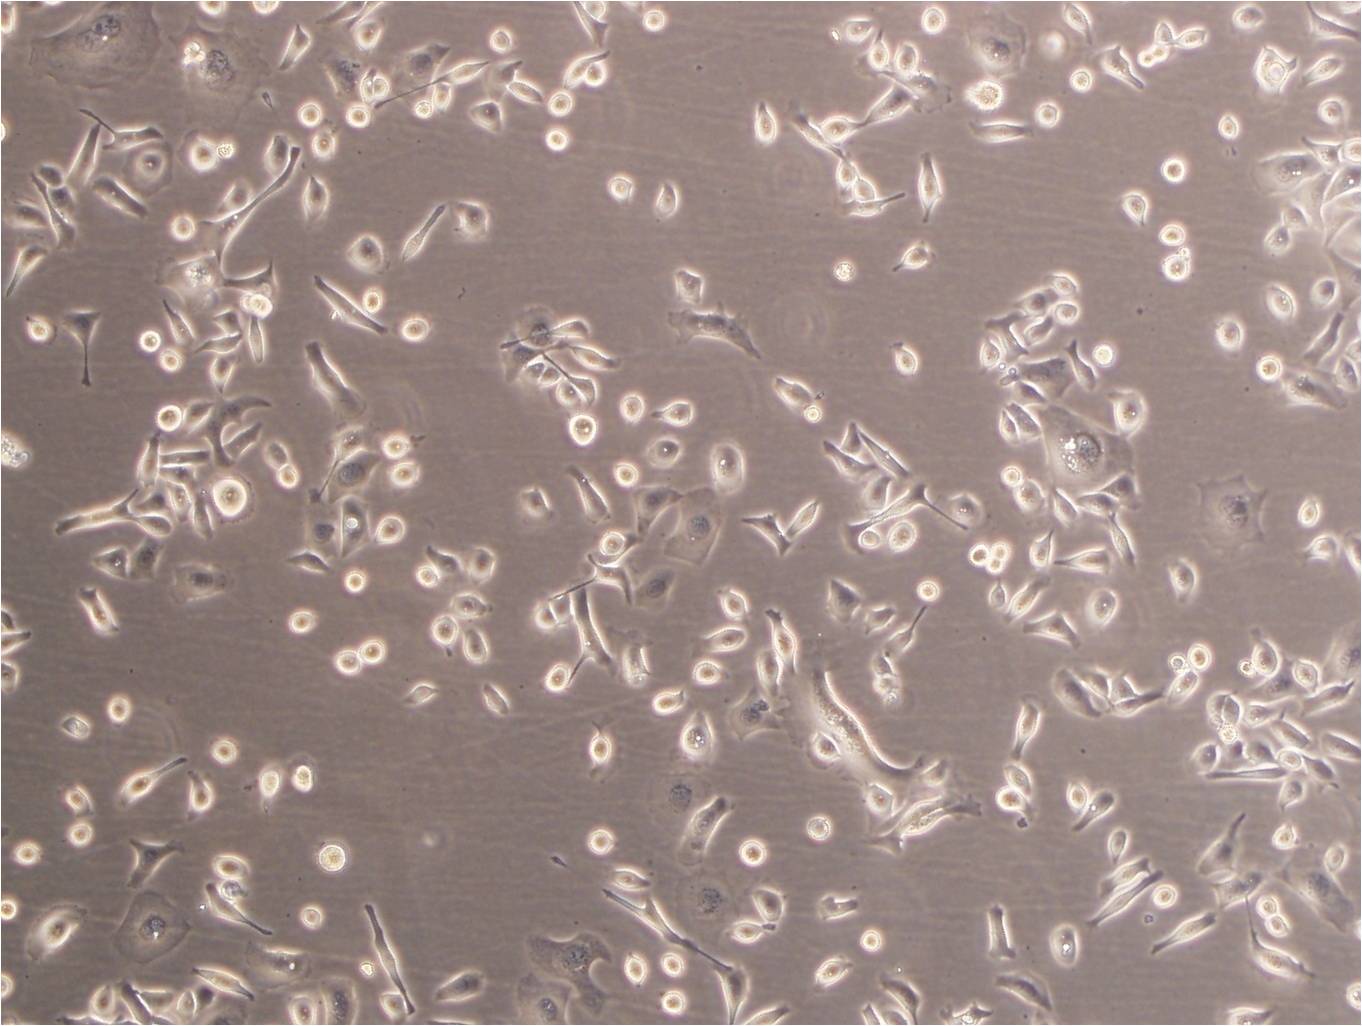 JC epithelioid cells小鼠乳腺癌细胞系